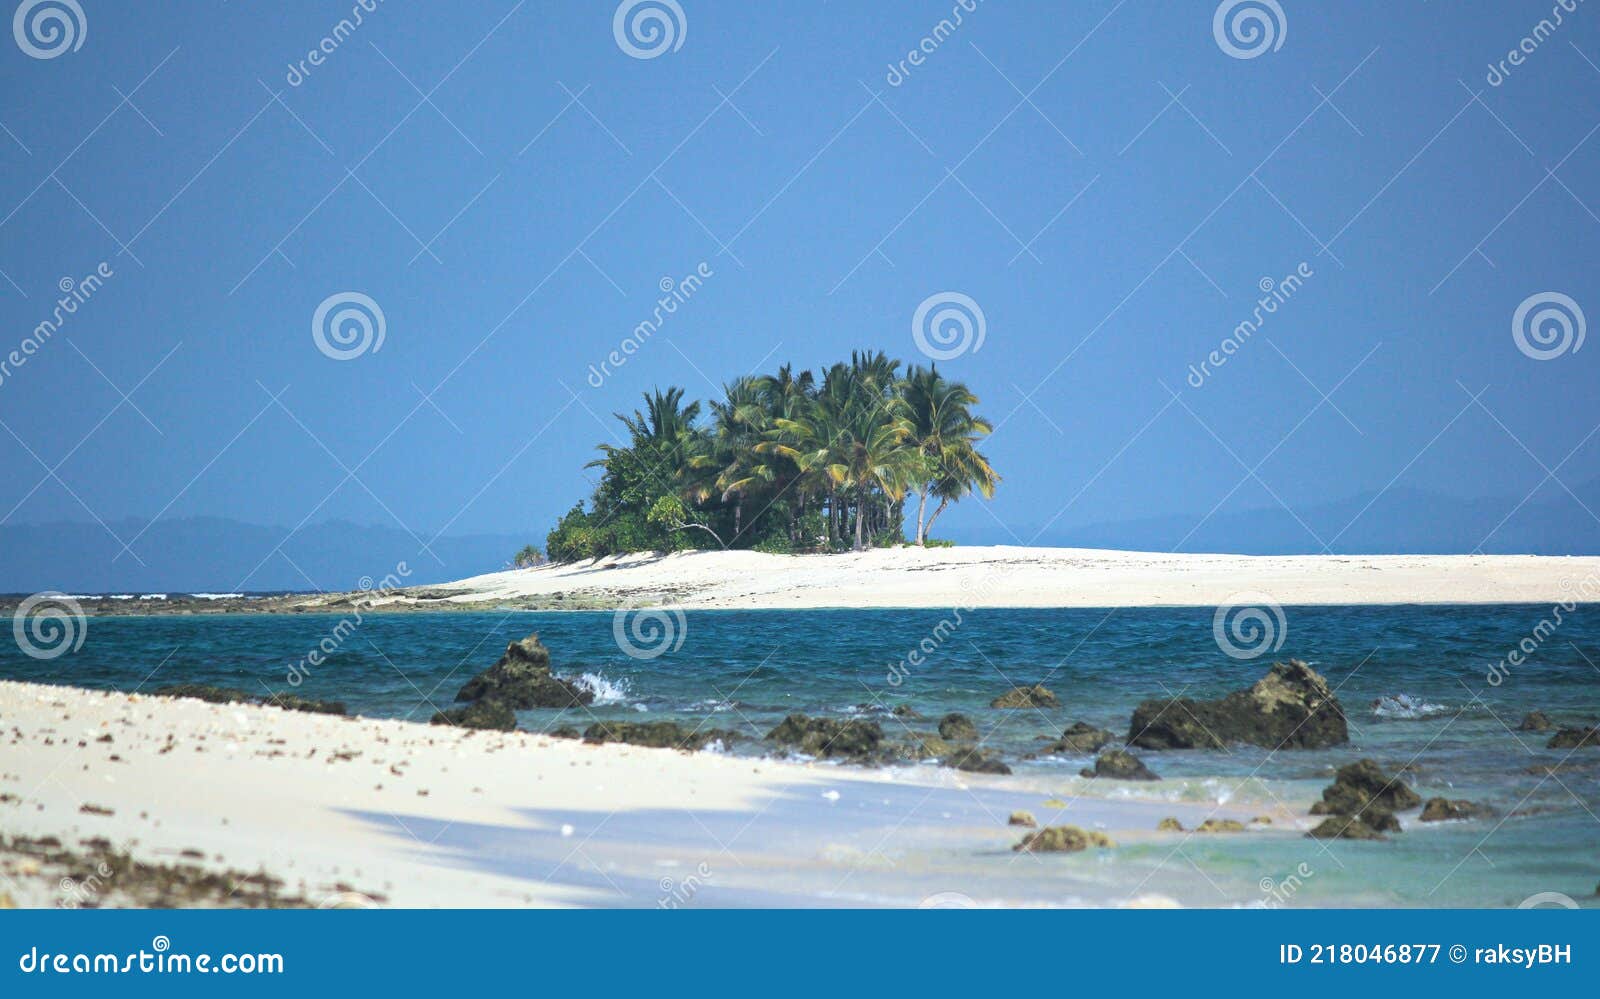 sand bar at the britania islands, a popular destination in surigao del sur, philippines